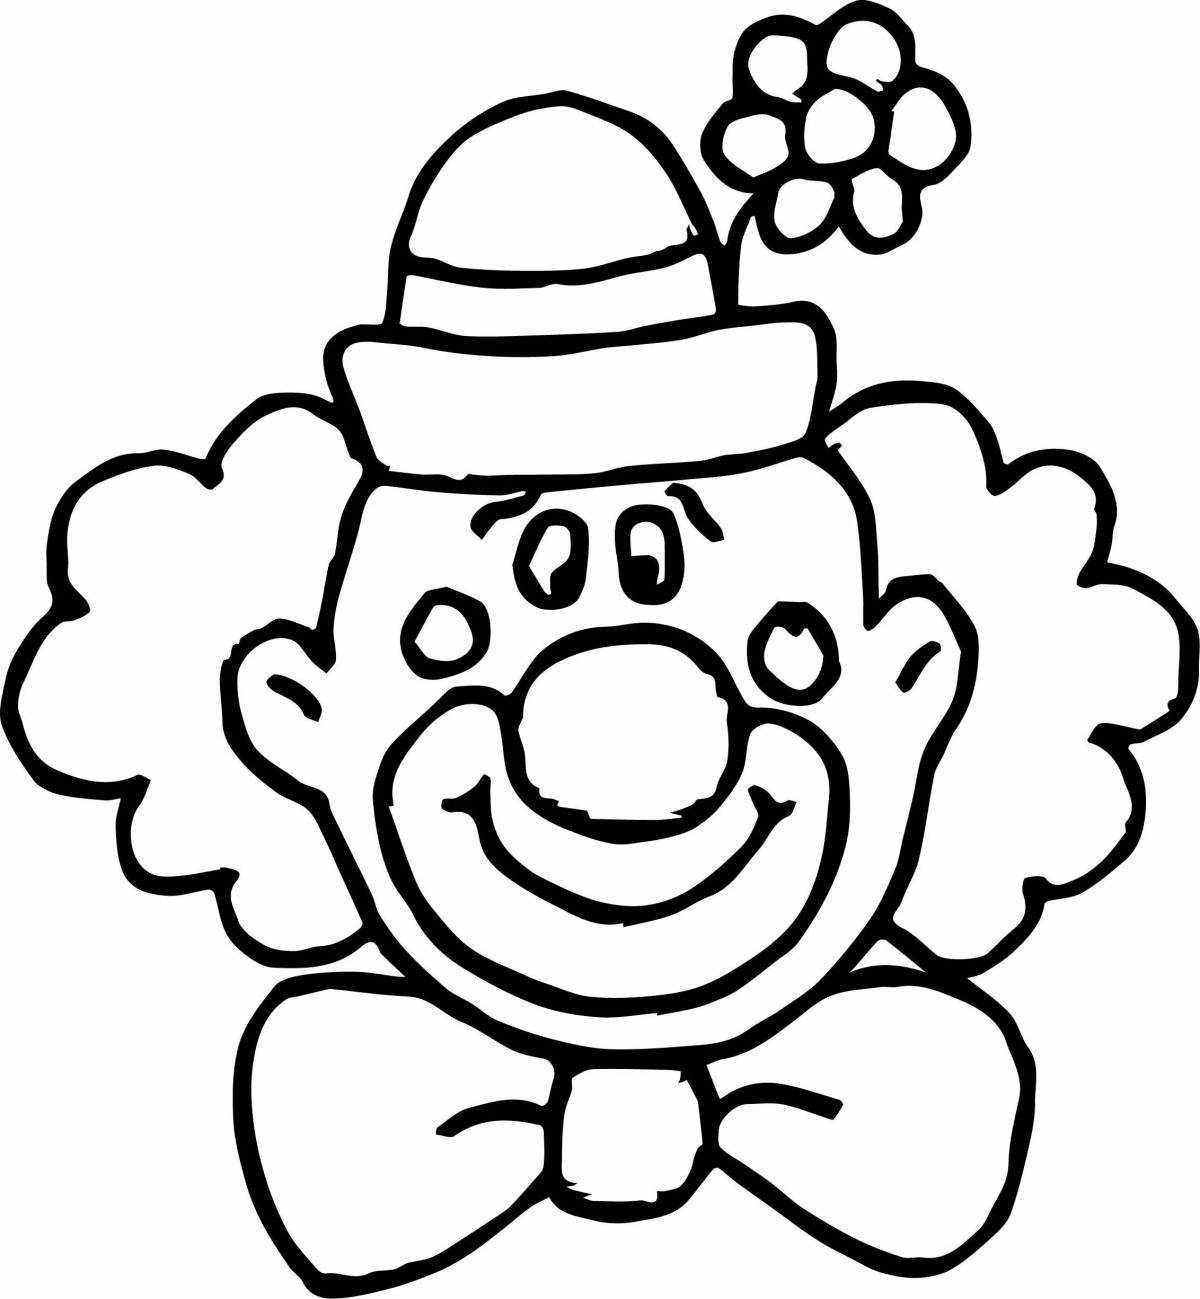 Adorable clown coloring book for preschoolers